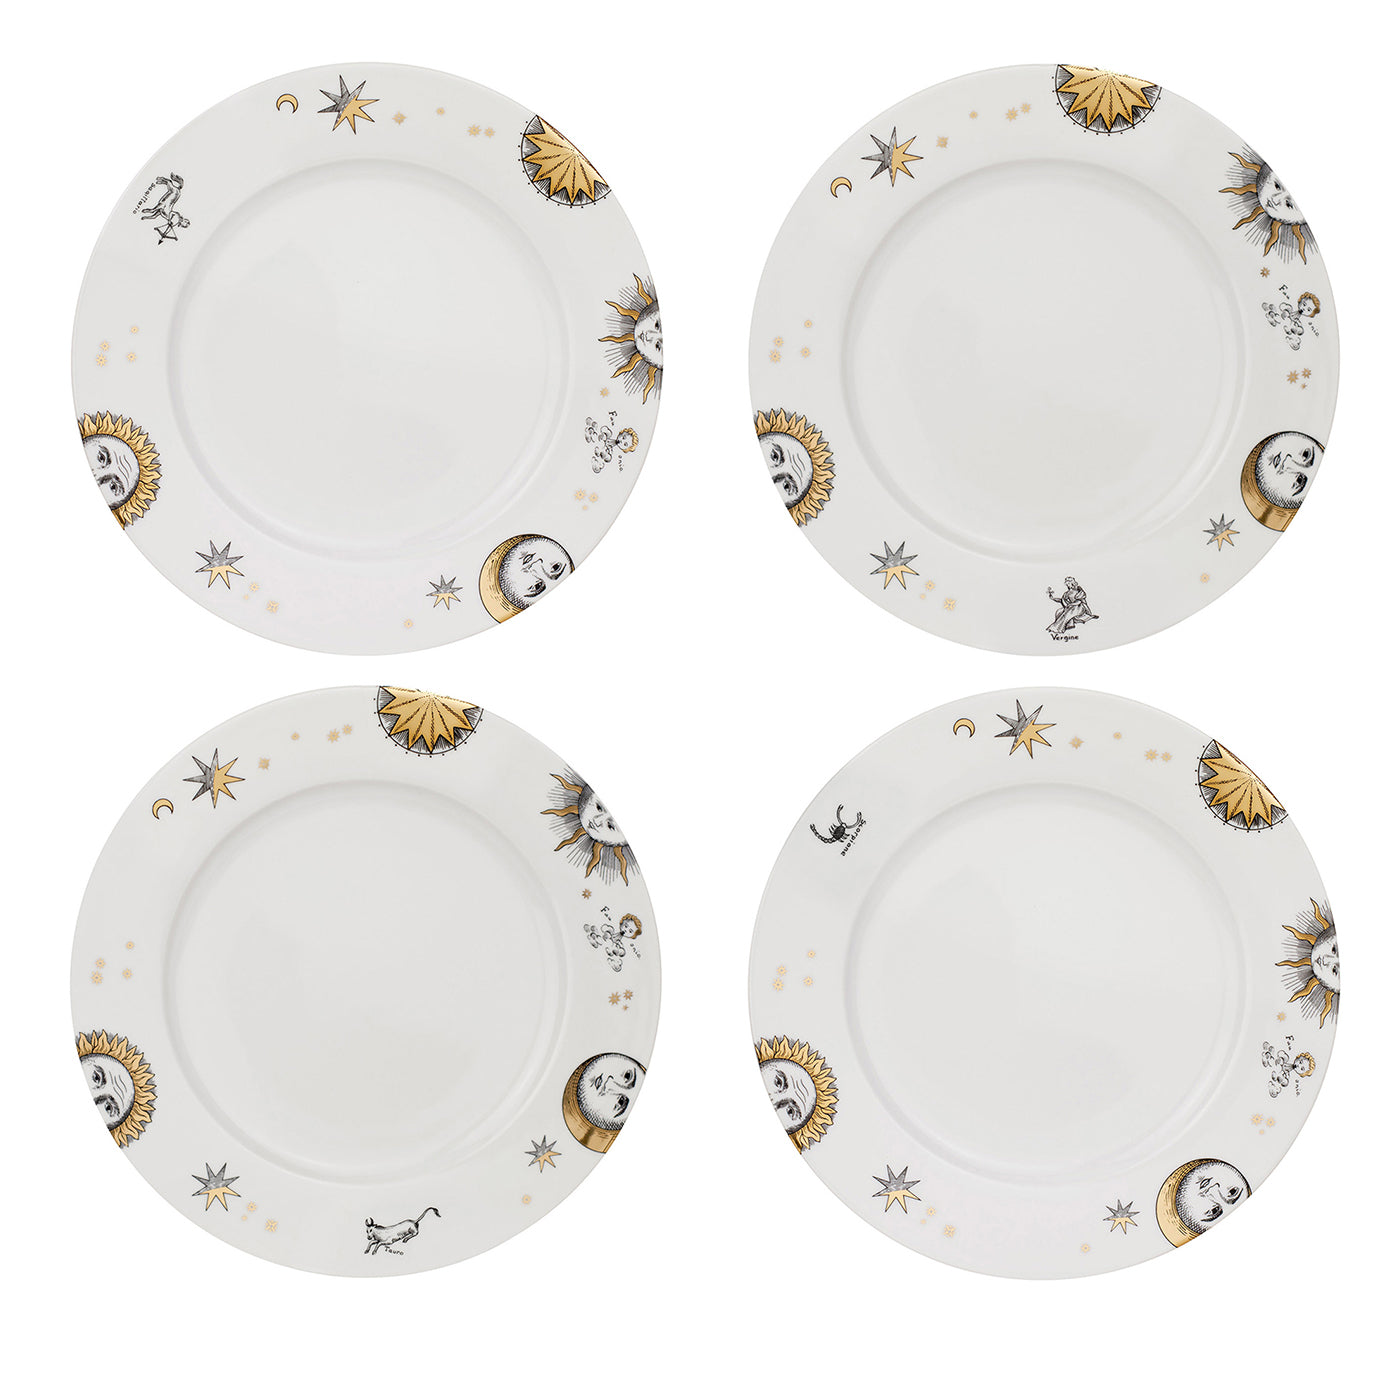 Set of 12 Astronomici Dinner Plates - Alternative view 1